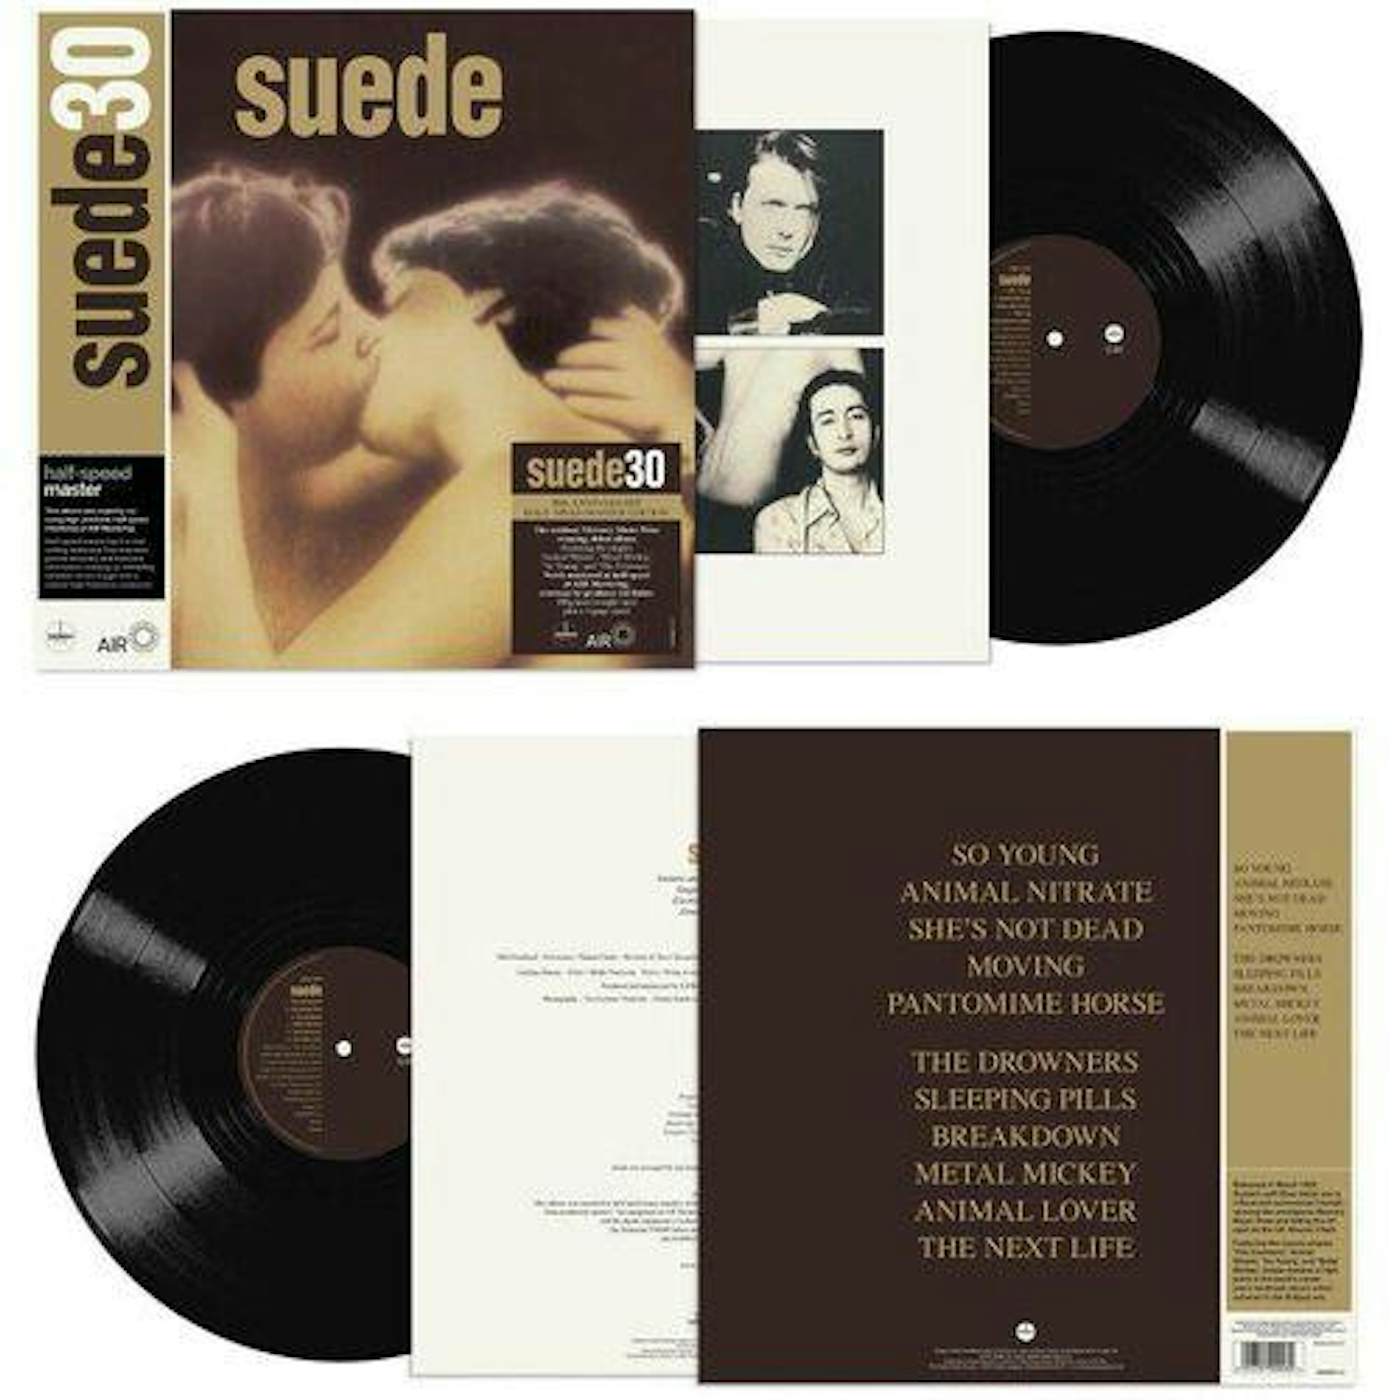 Suede: 30th Anniversary Vinyl Record